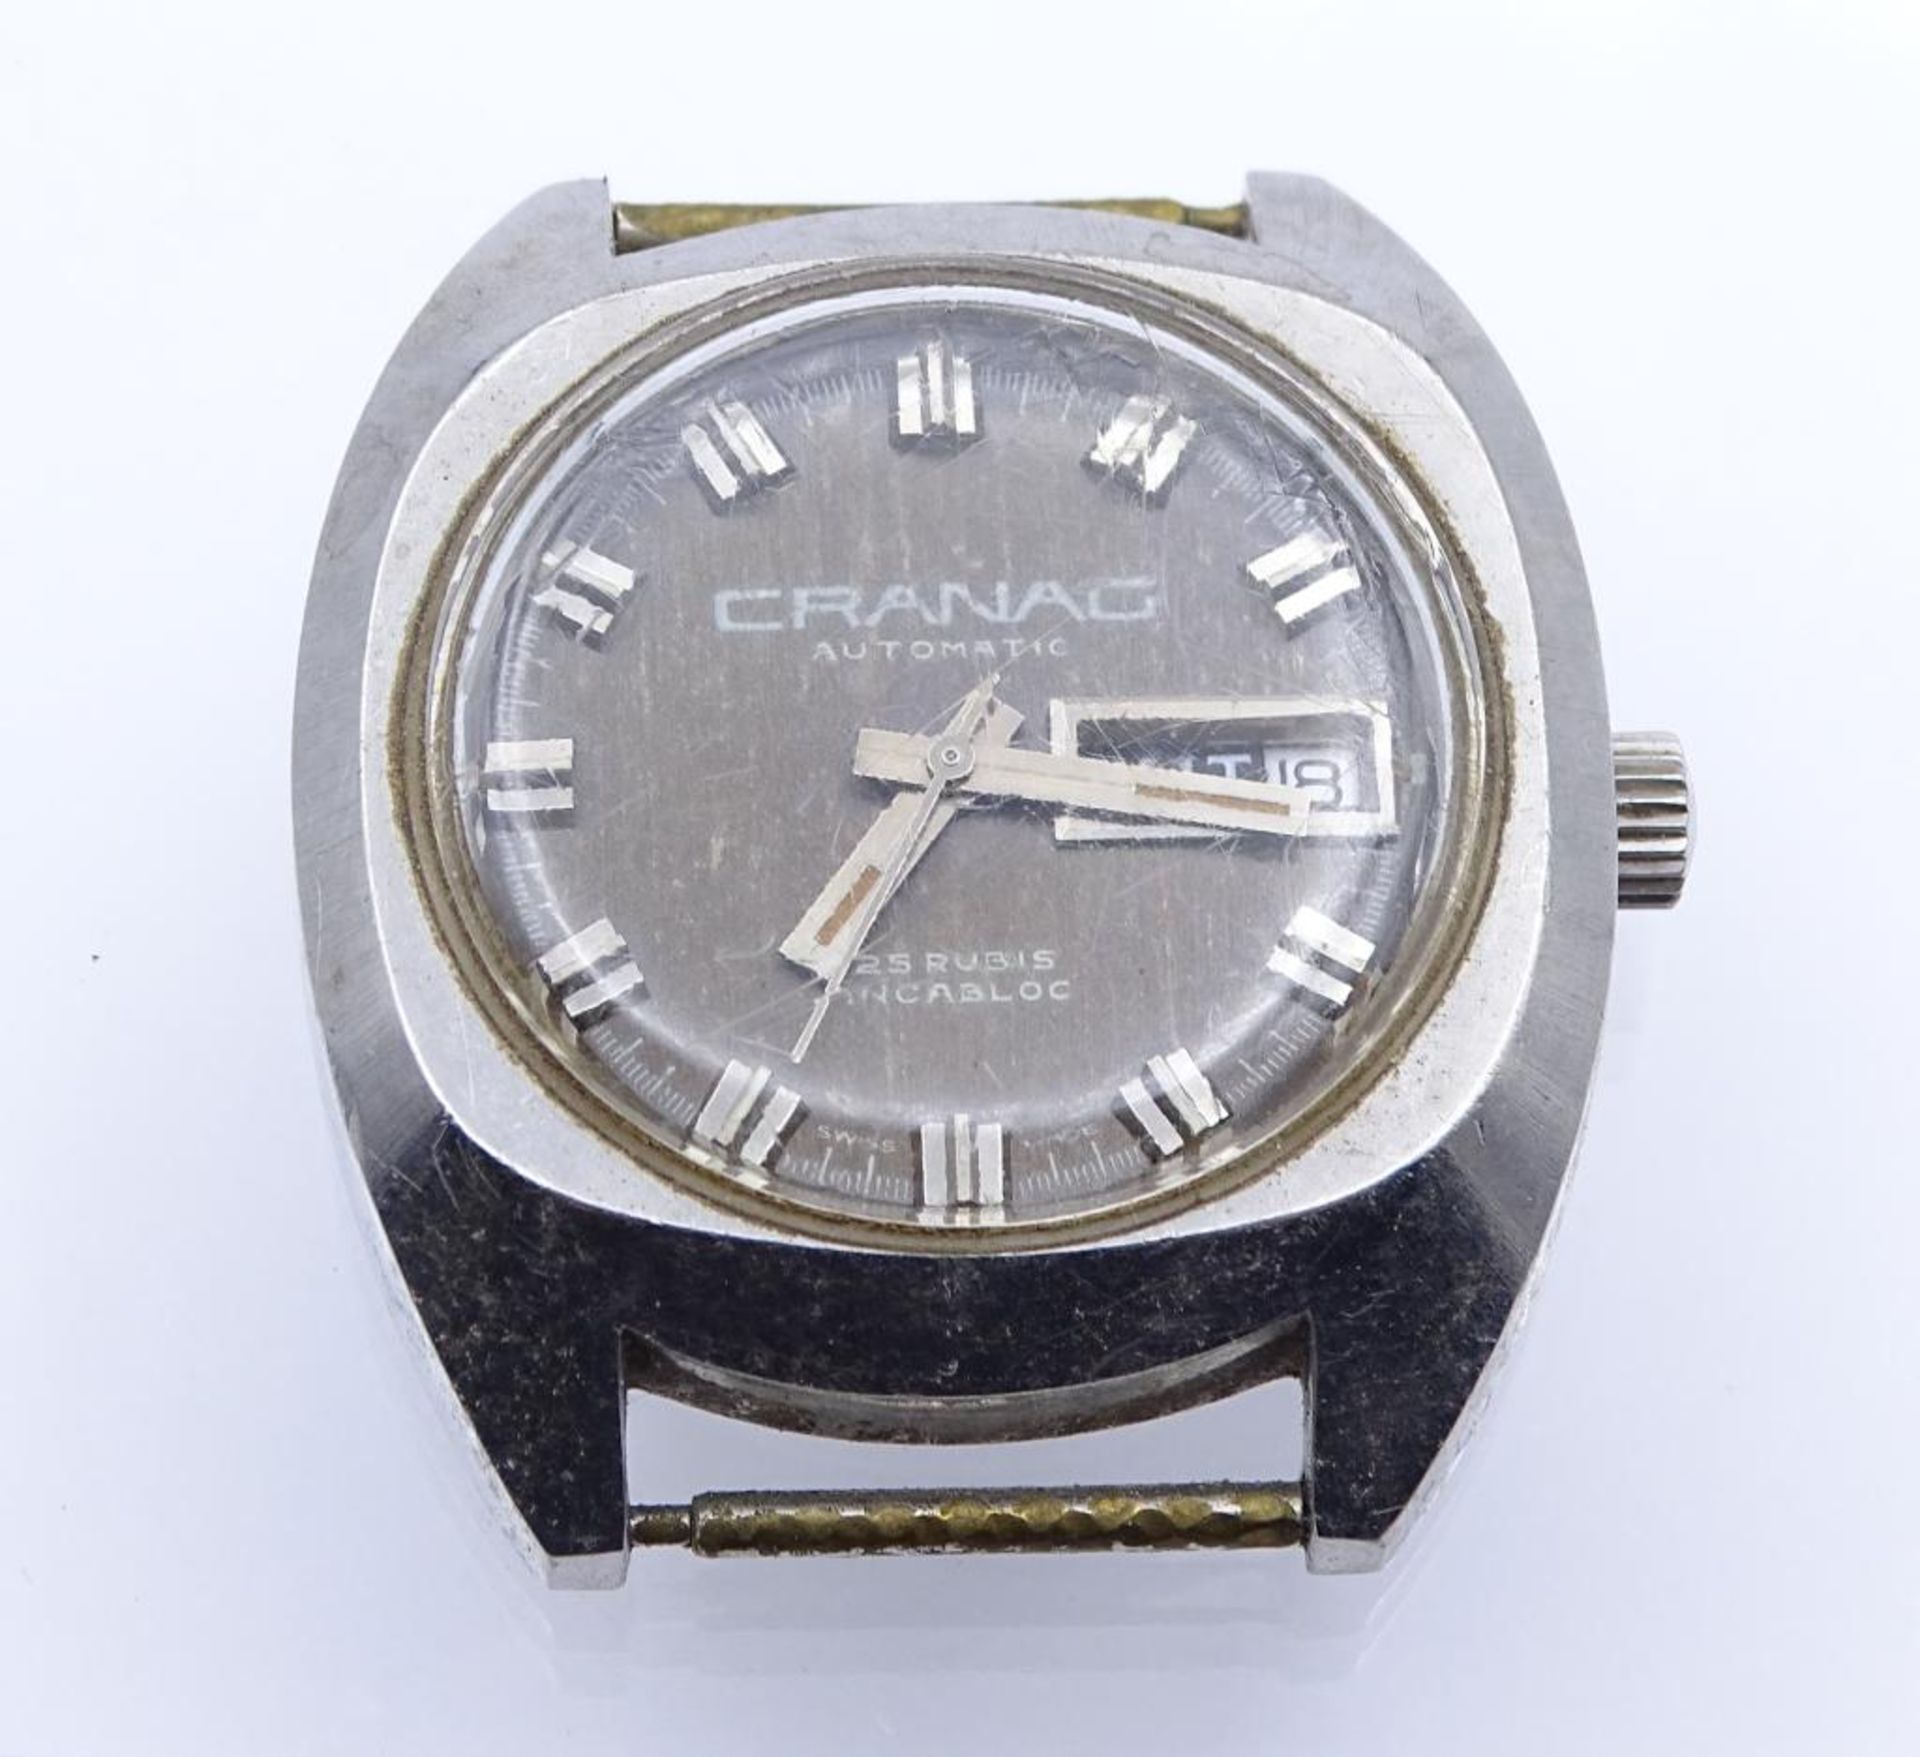 Armbanduhr "Cranag",automatic,Werk läuft,Edelstahl,Gehäuse d-36mm, Tragespuren,ohne Uhrenba- - -22.